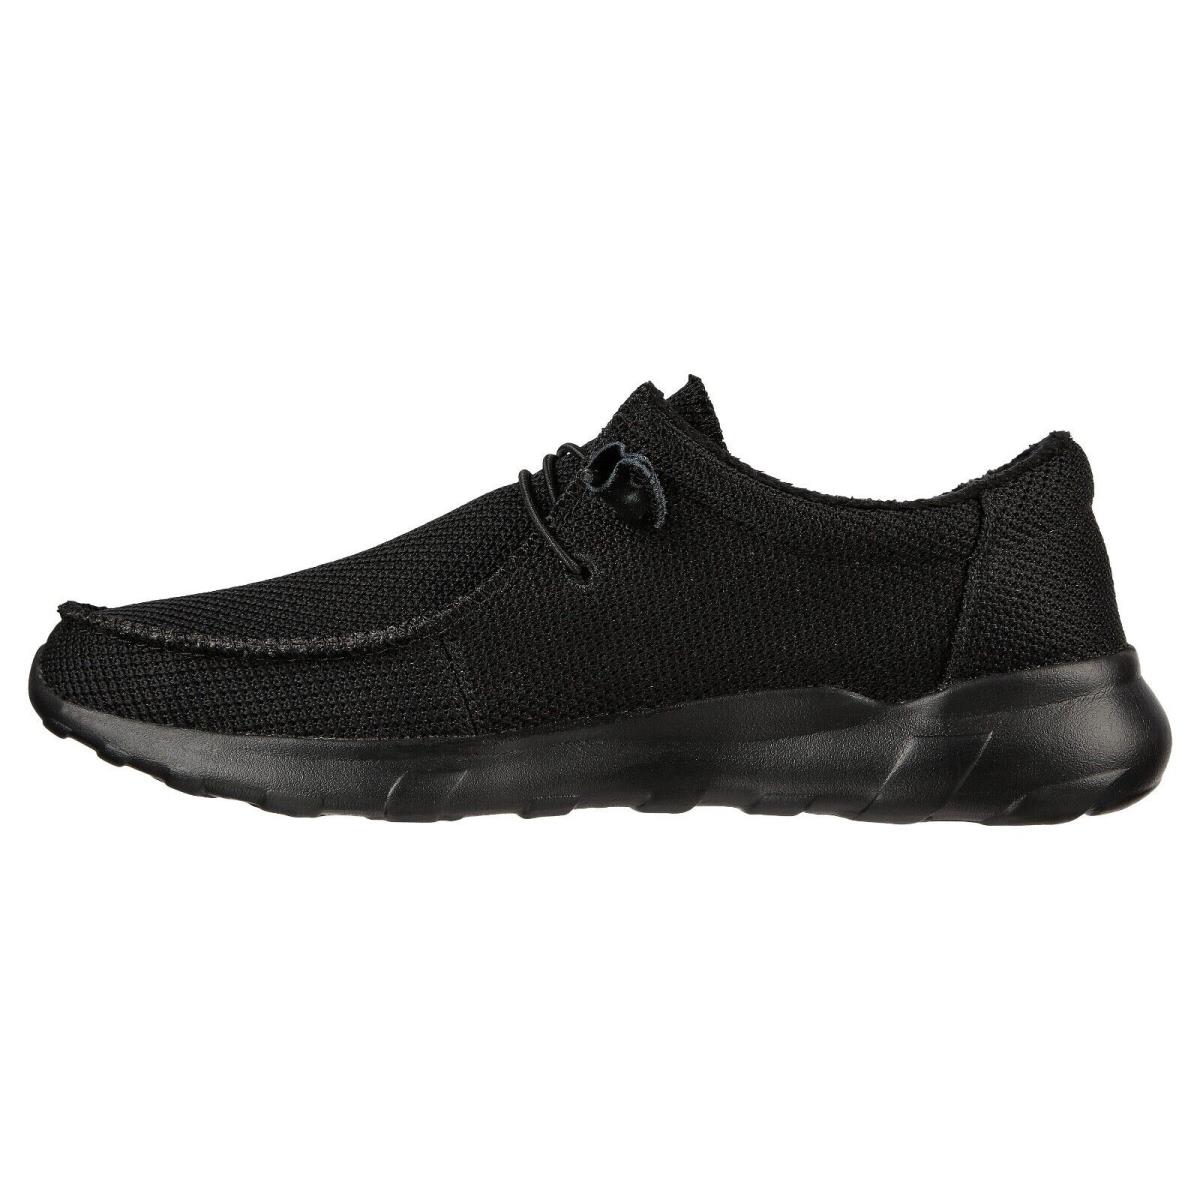 Skechers shoes Bulger Zenwick - Black 7